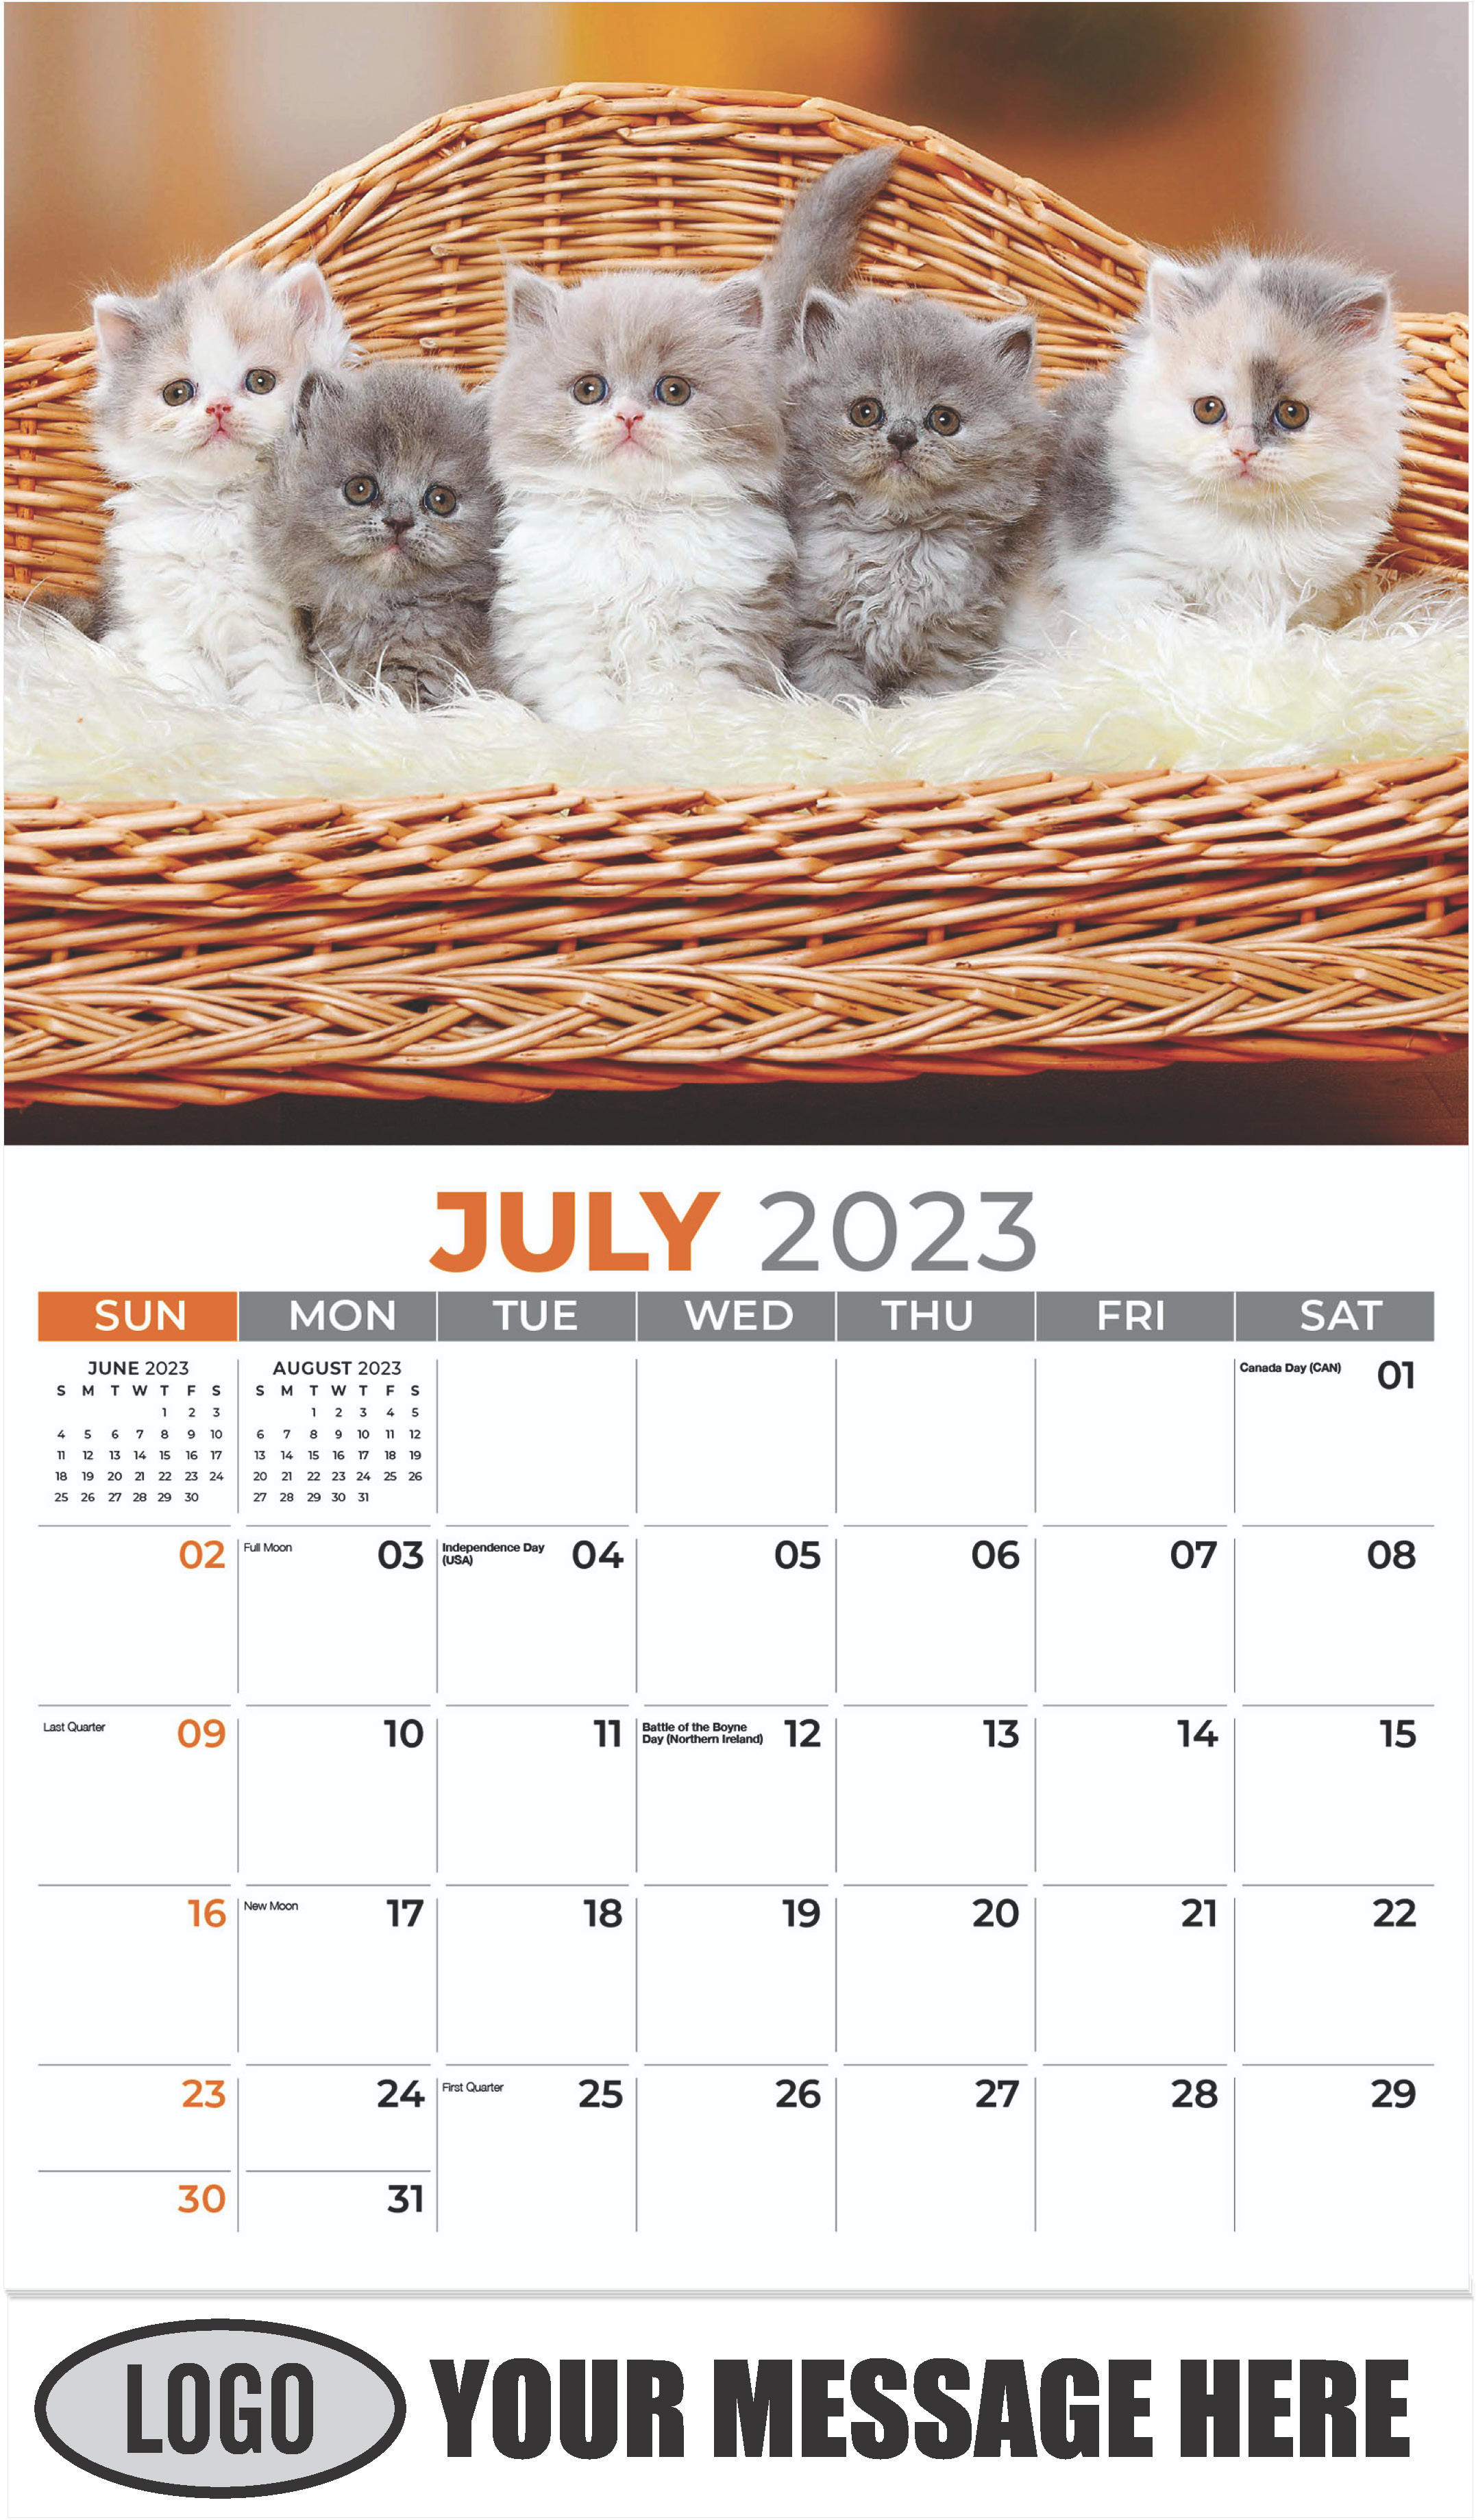 British Longhair - July - Kittens 2023 Promotional Calendar